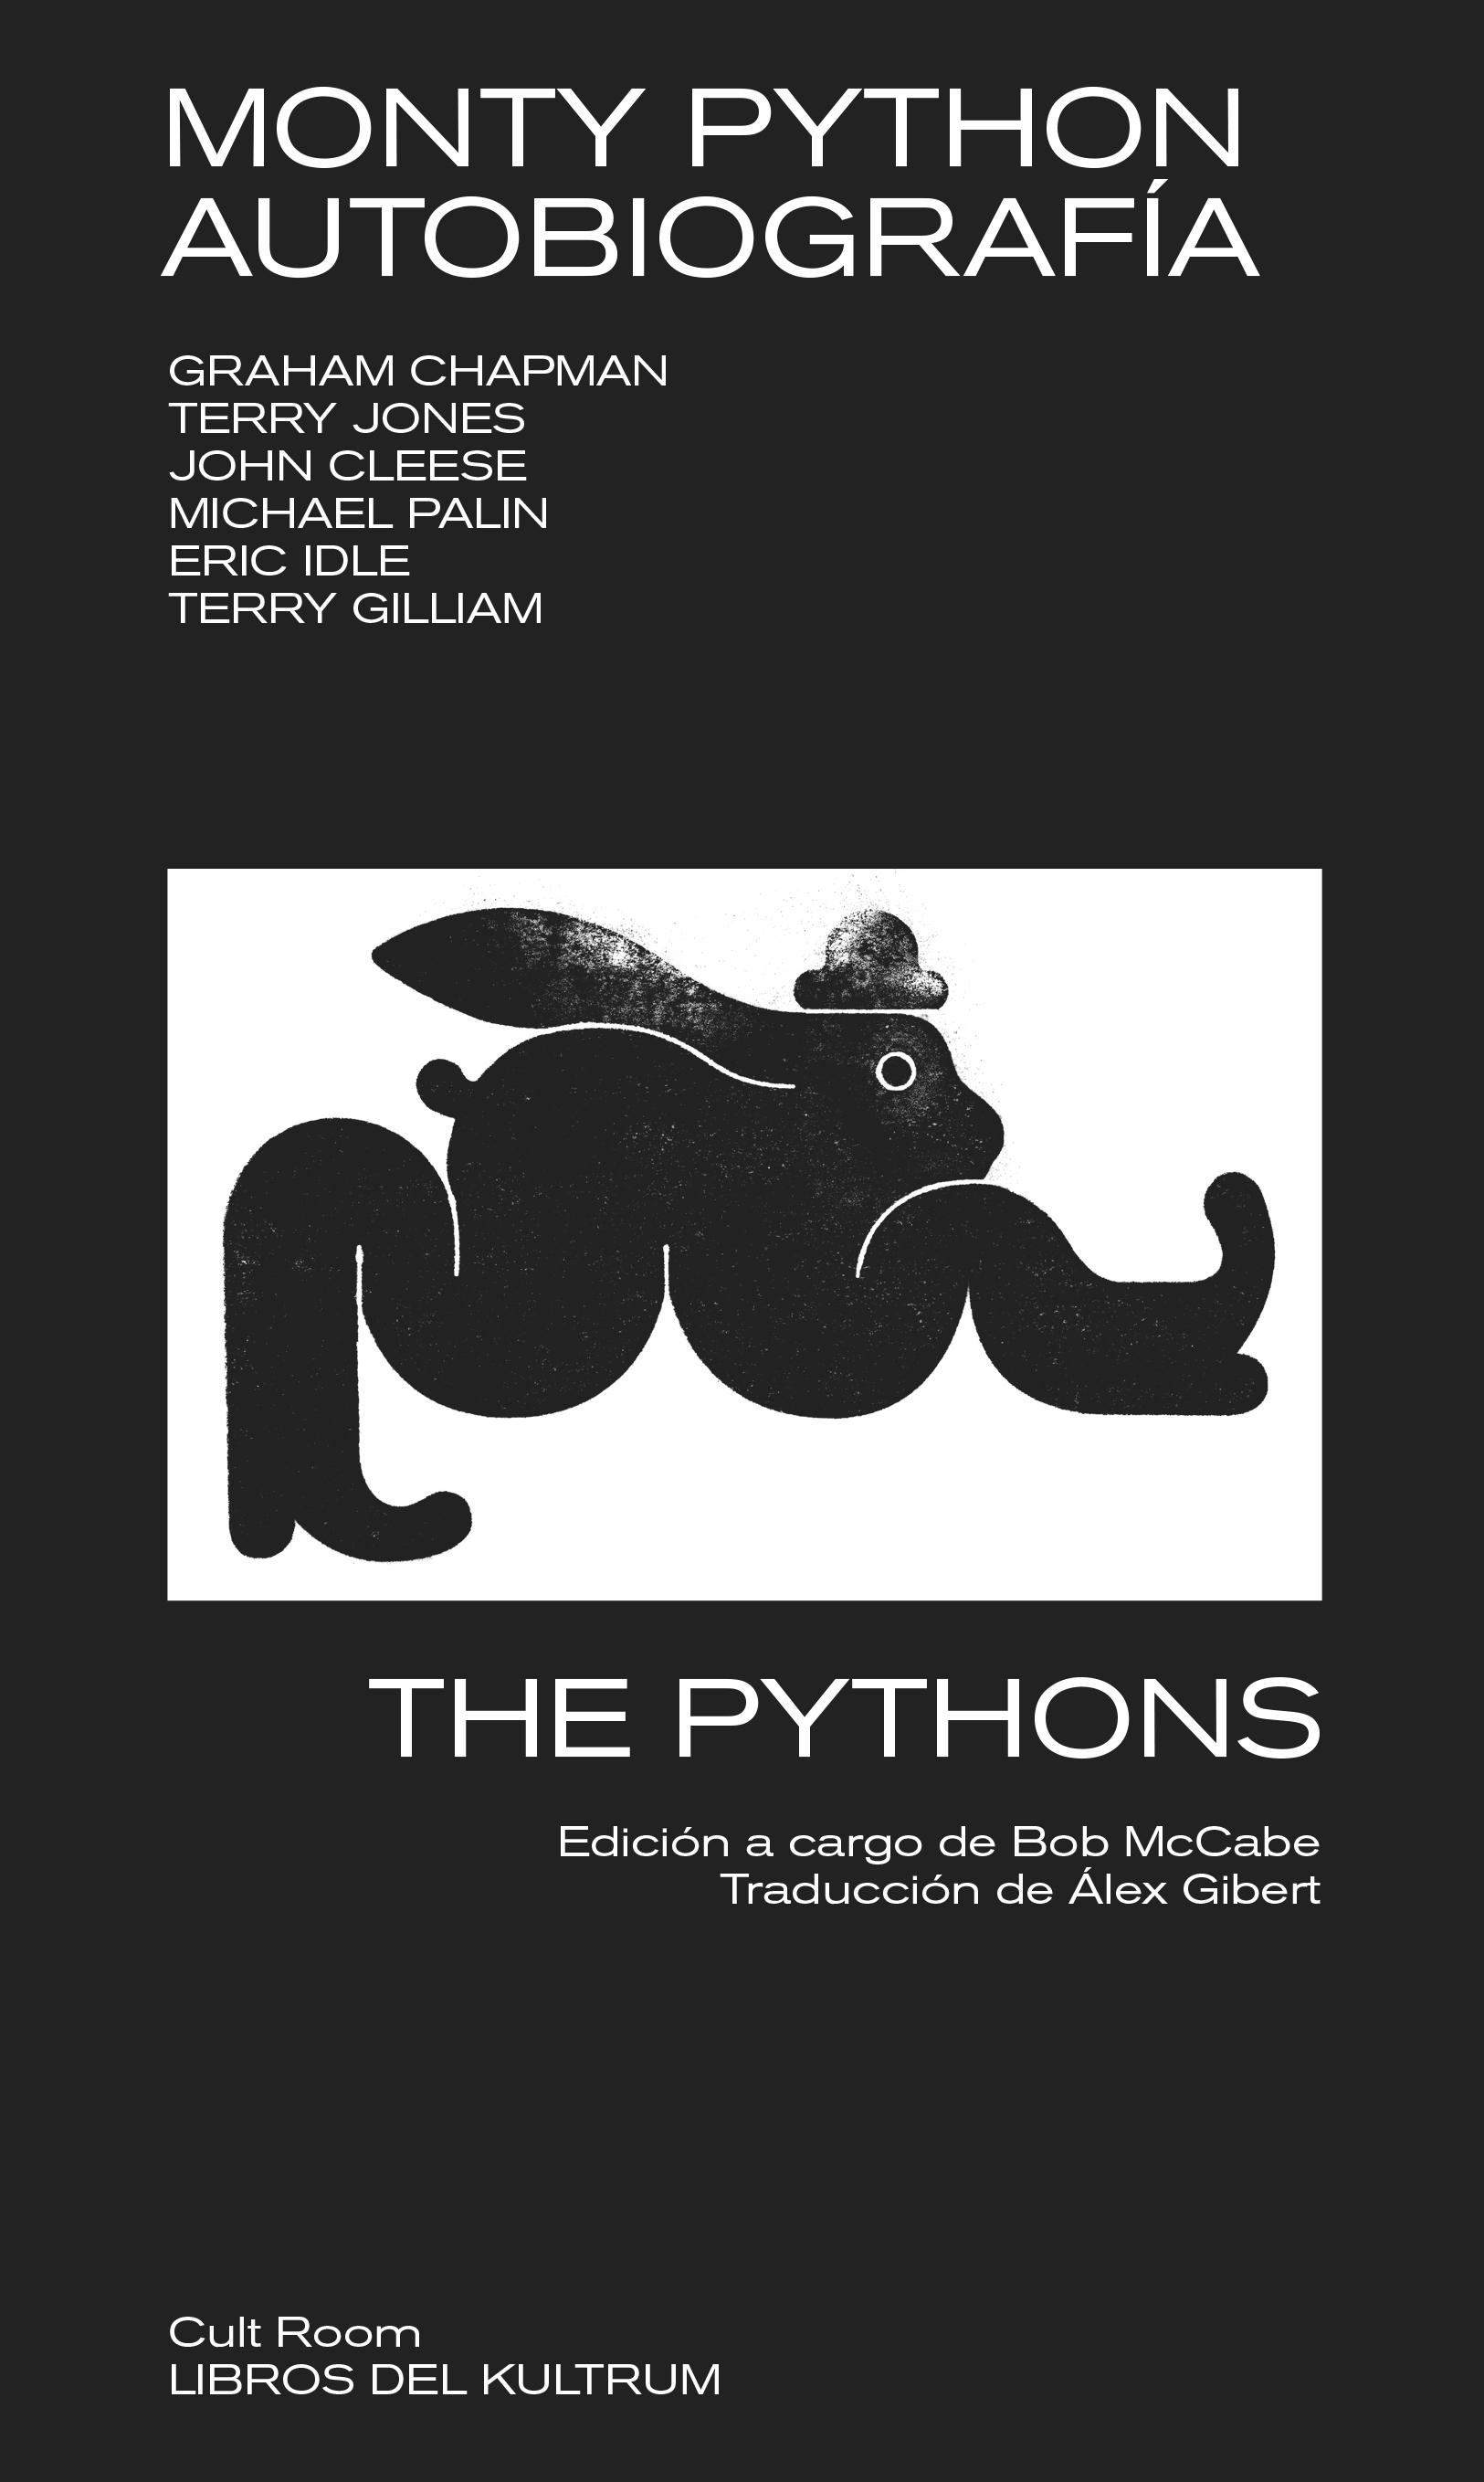 Monty Python. Autobiografía "The Pythons"